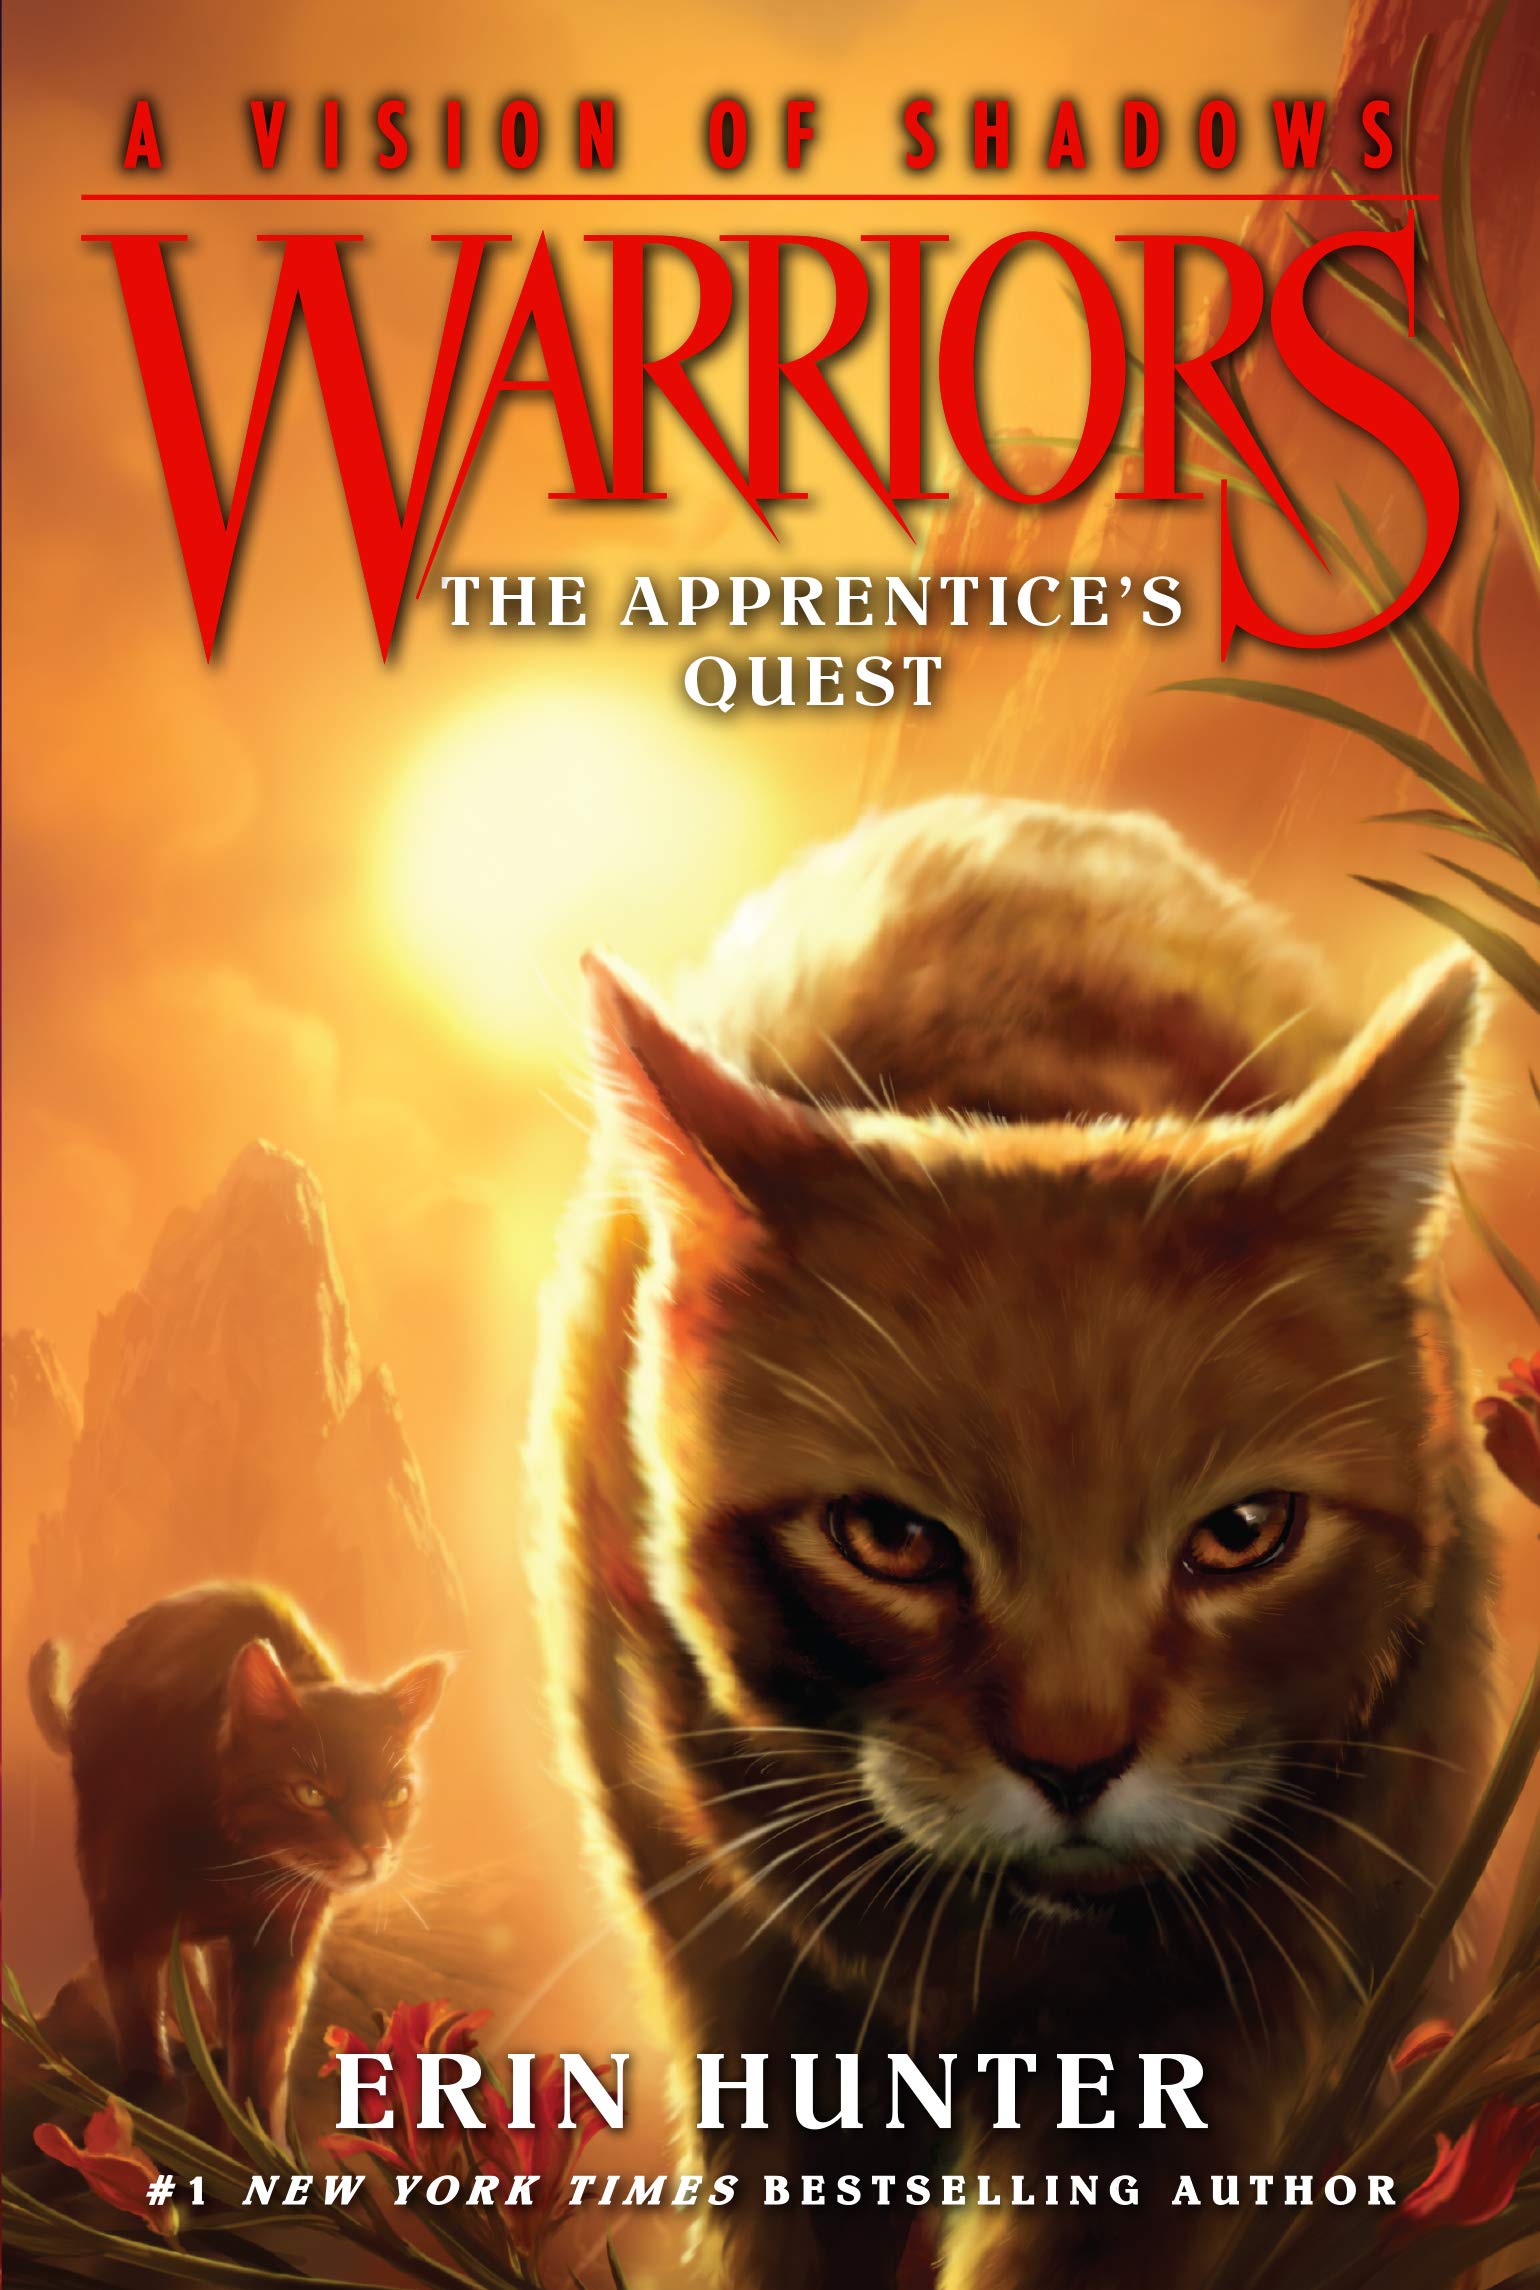 Warrior Cat Movie Confirmed for 2018?, Warrior Cats Weird Facts